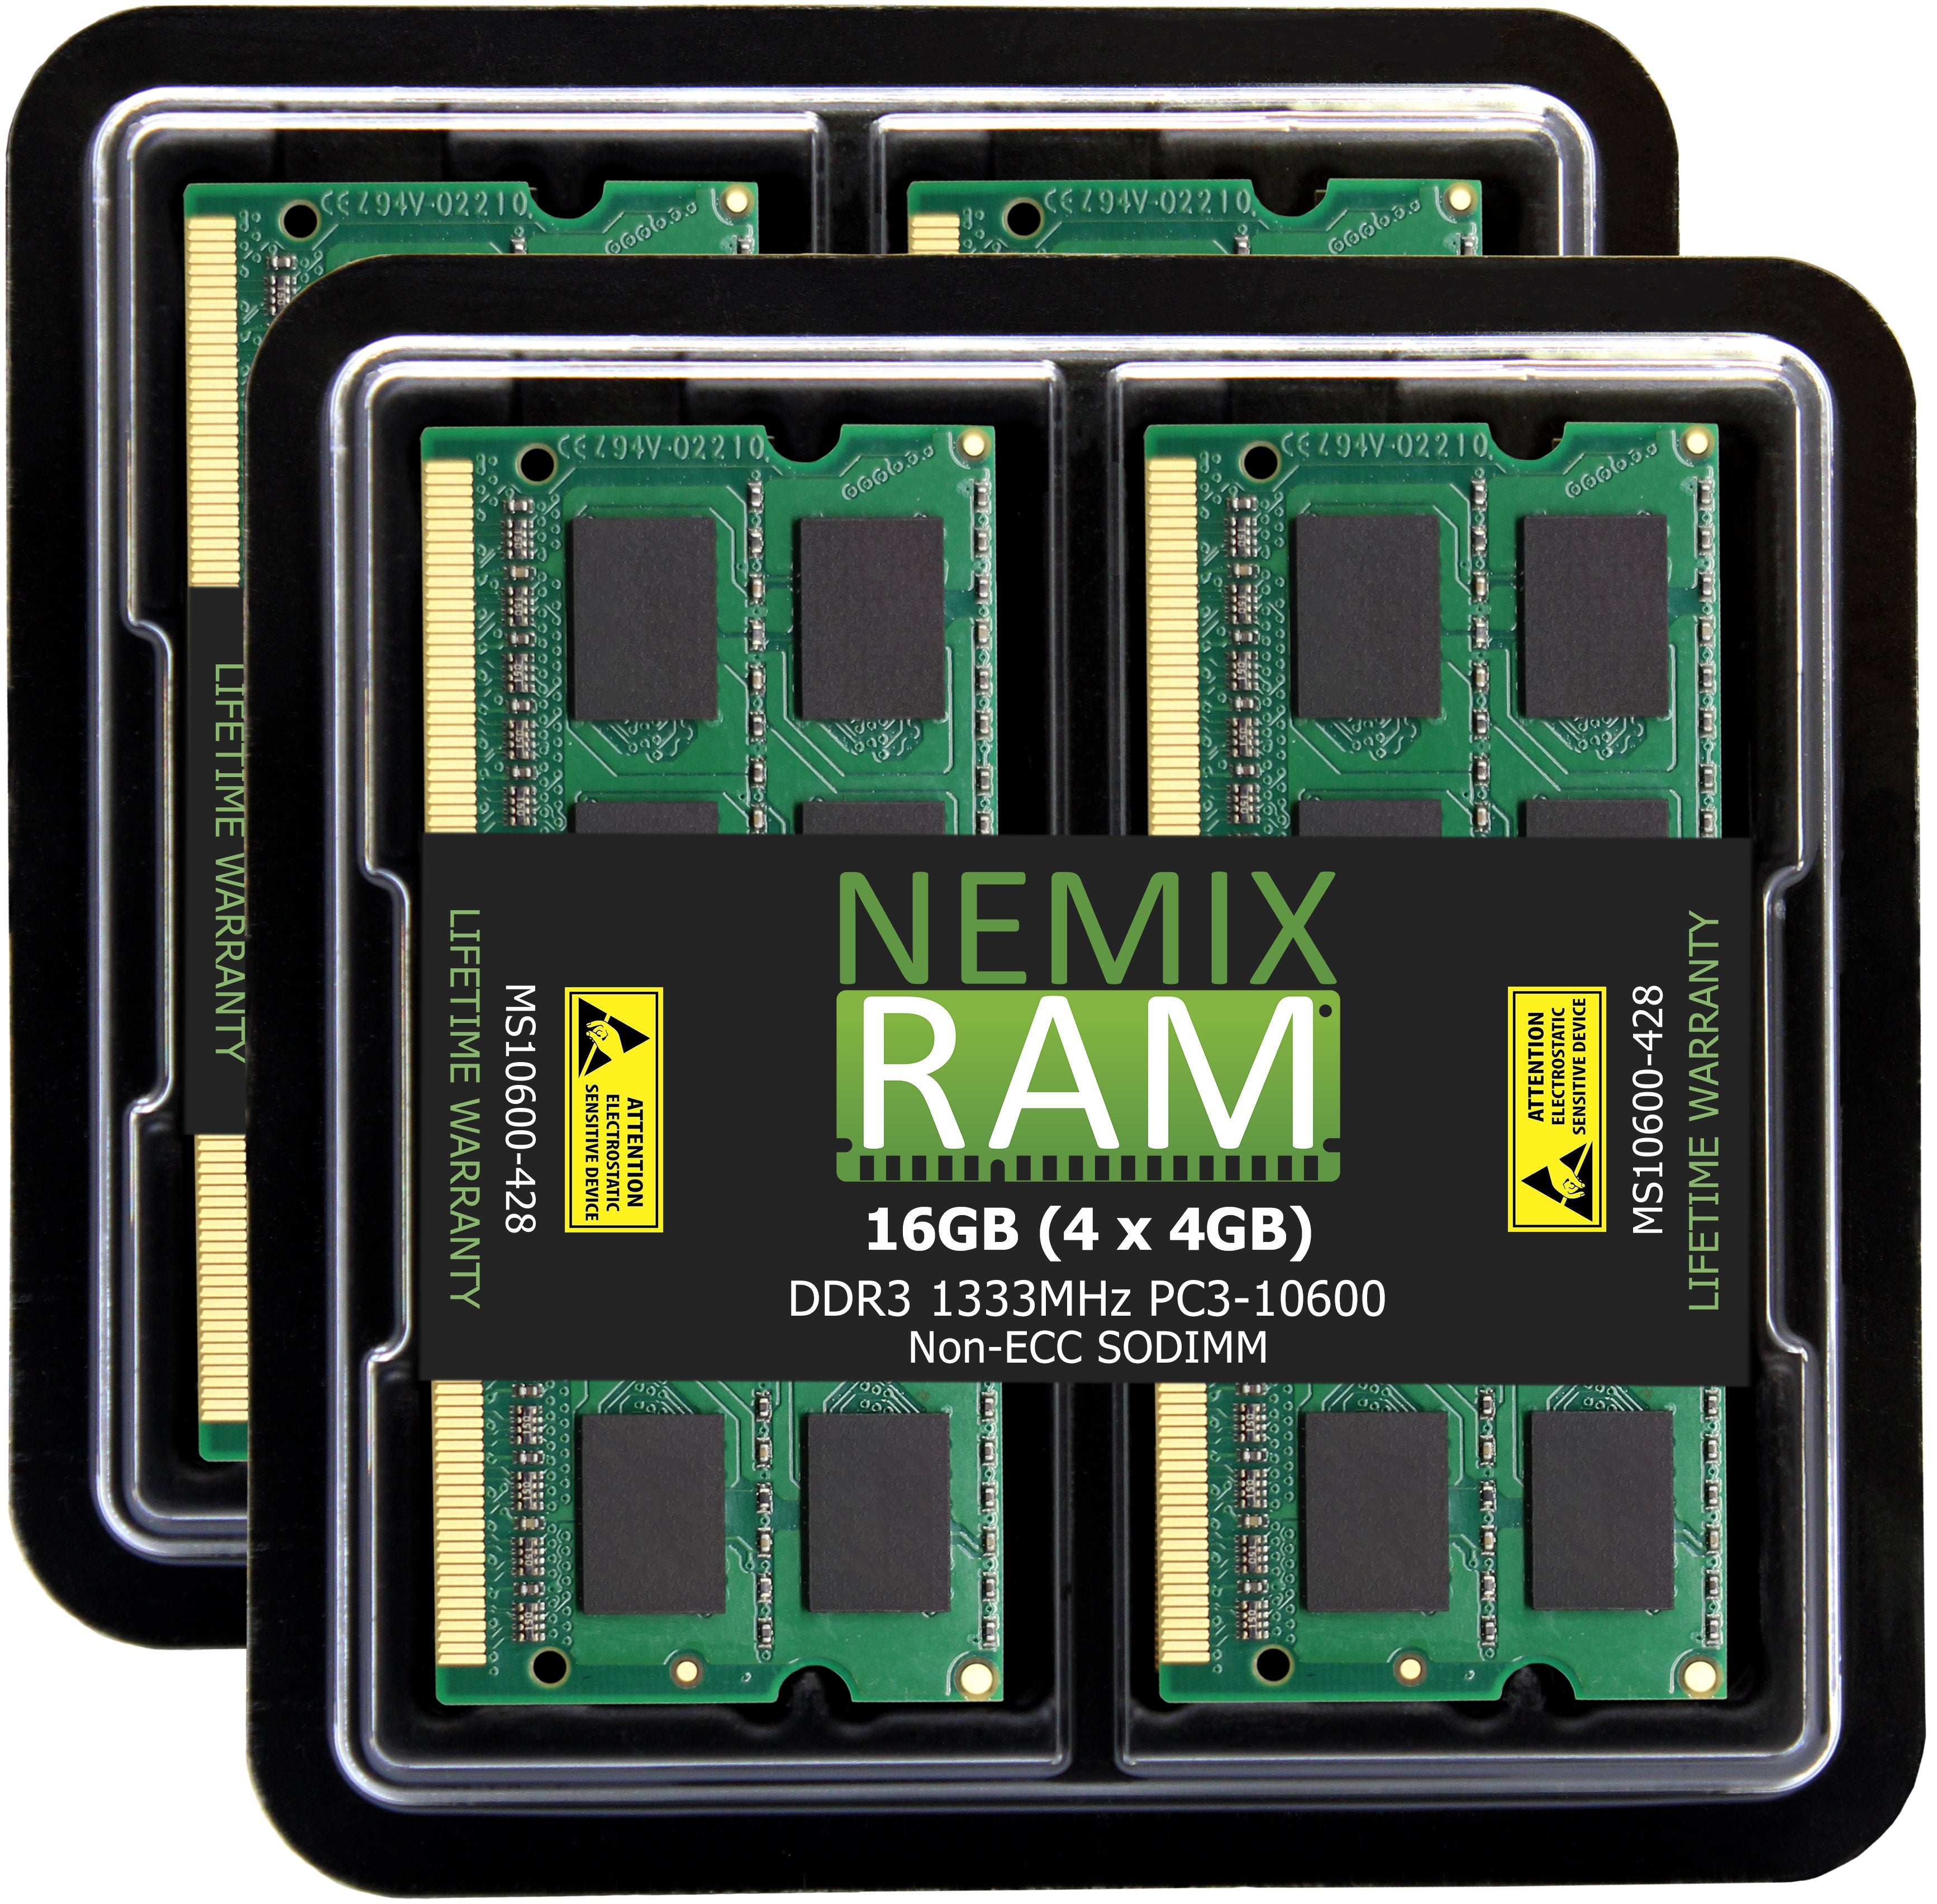 DDR3 1333MHZ PC3-10600 SODIMM for Apple iMac 2010 27" & 21.5" (11,3 11,2)